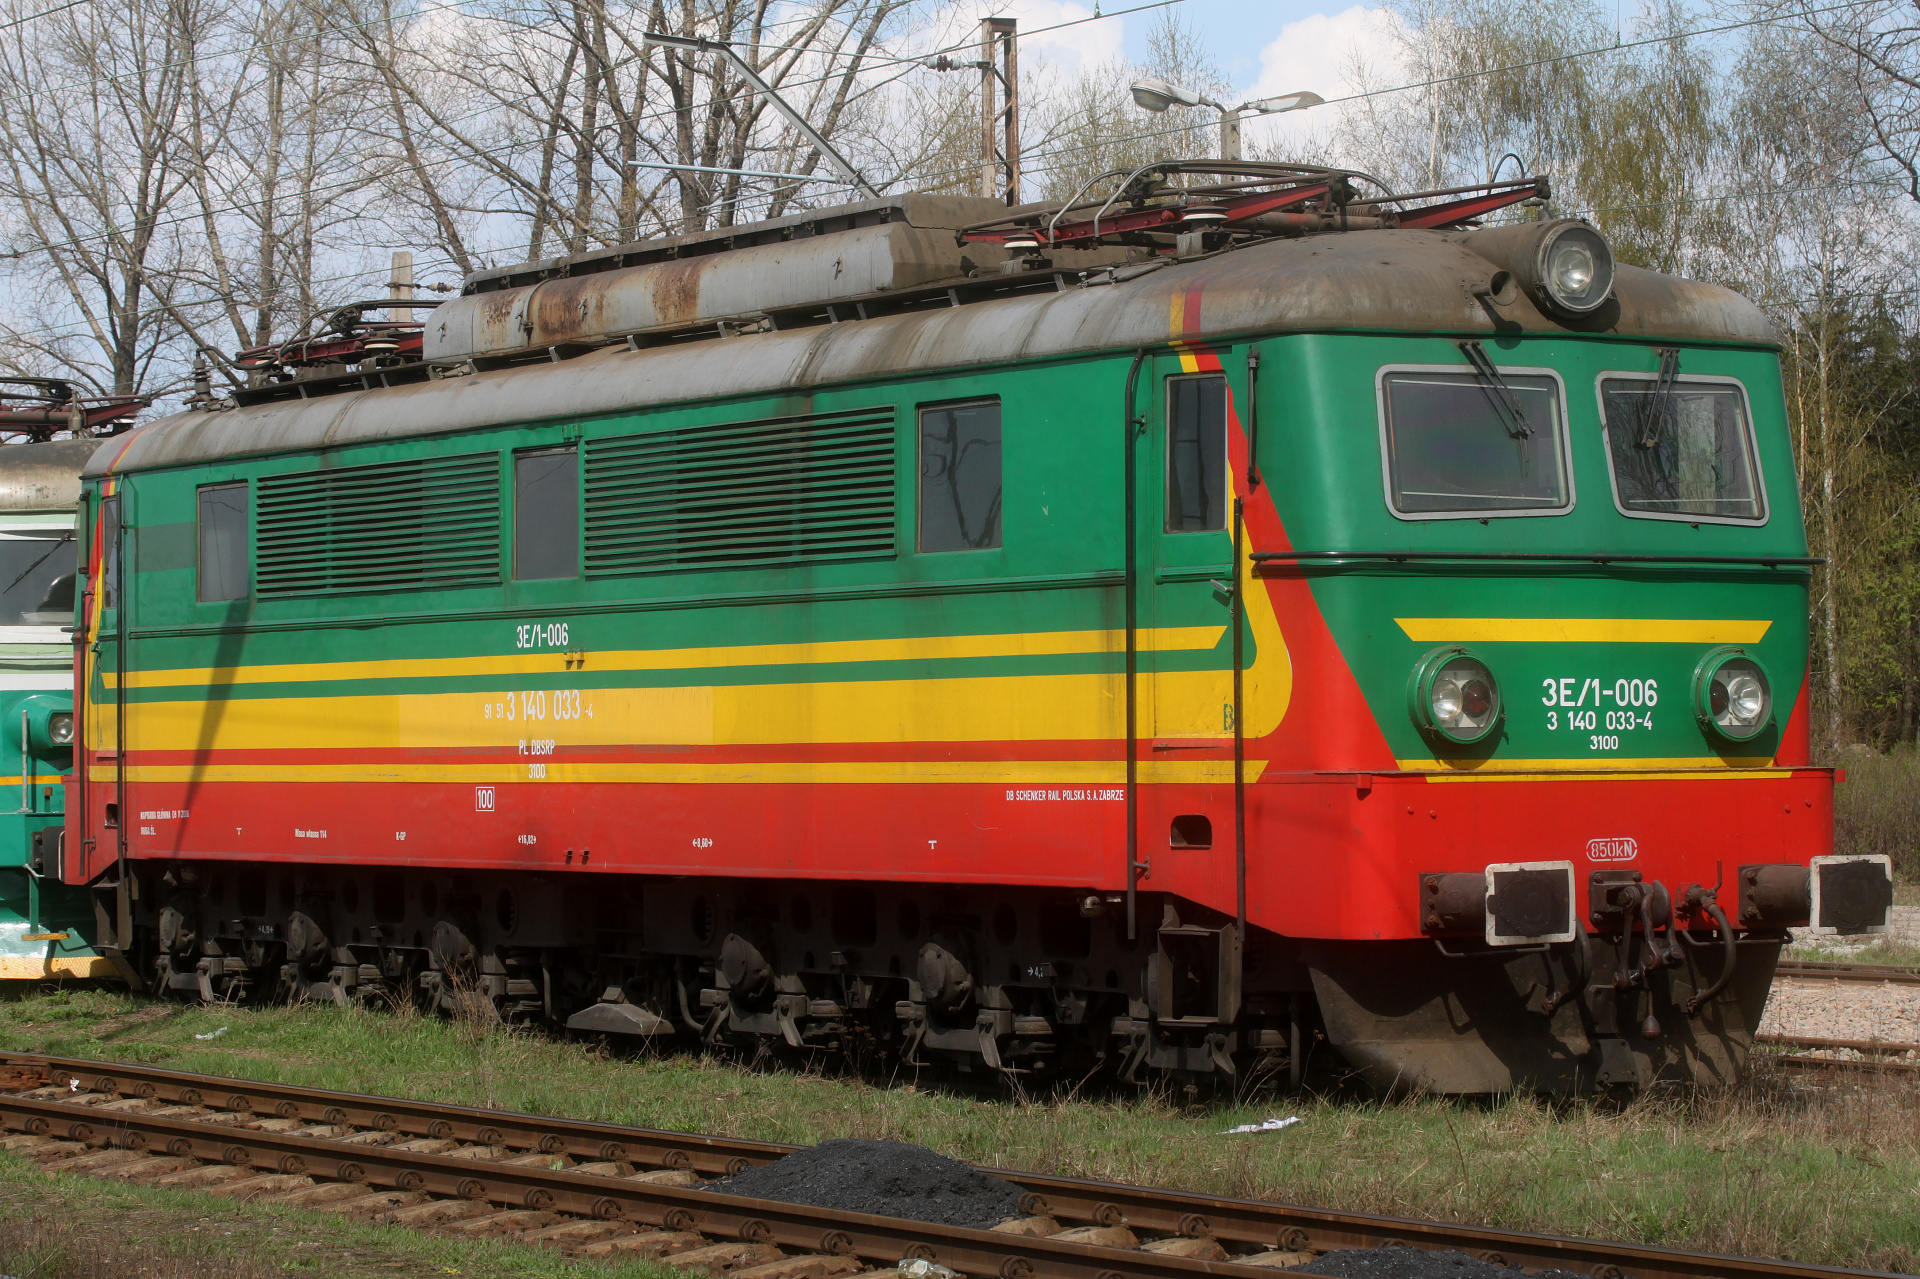 Pafawag 3E/1-006 (Vehicles » Trains and Locomotives)